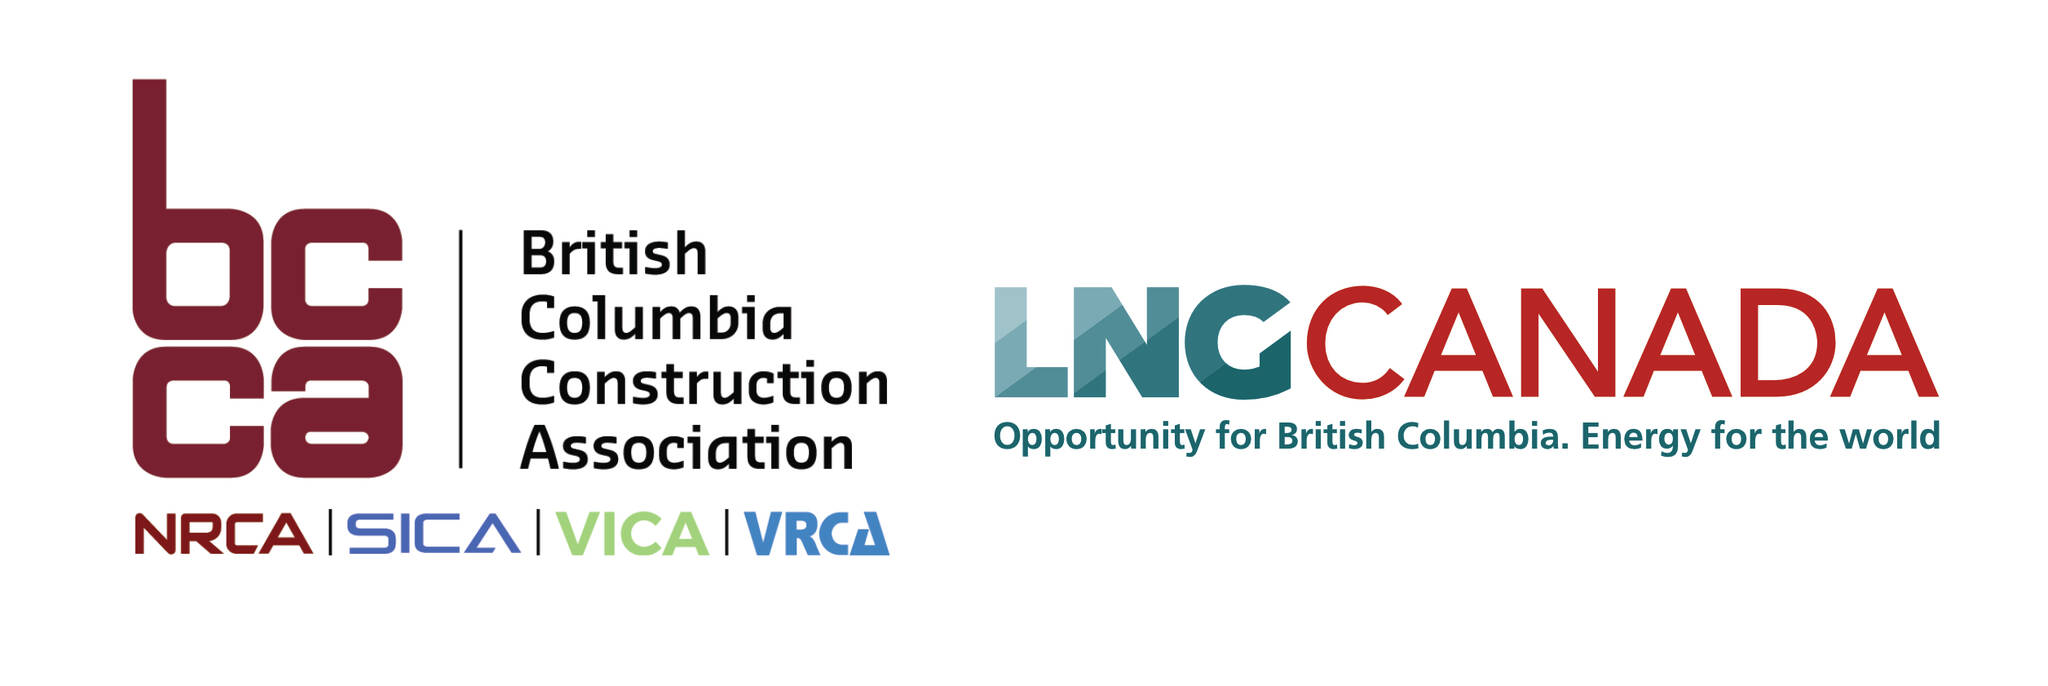 BCCA, LNG Canada logos